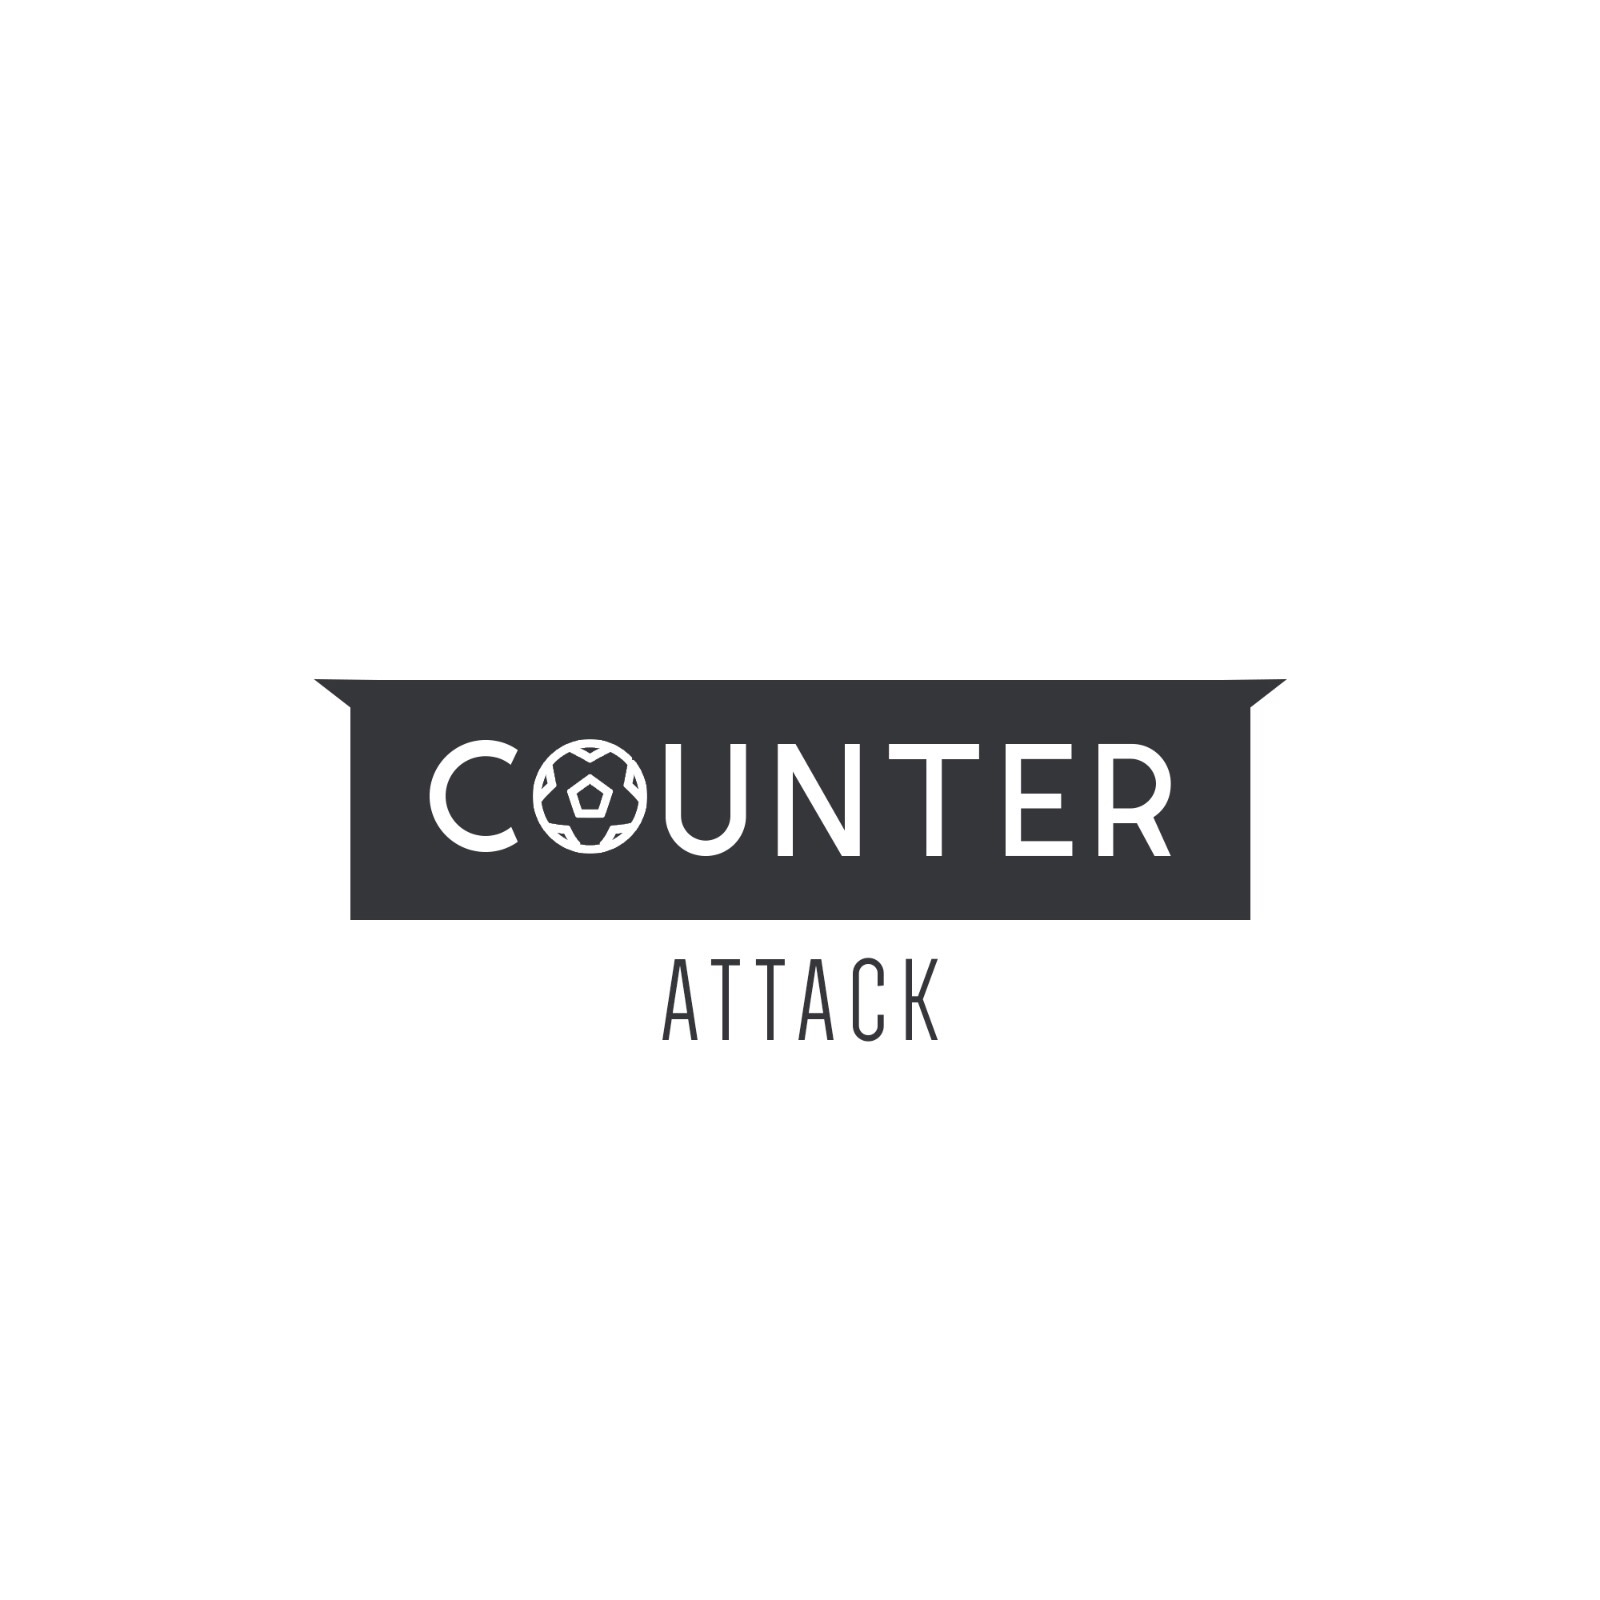 Counter Attack - Episode 141 - Dexter Blackstock On Life Beyond Football